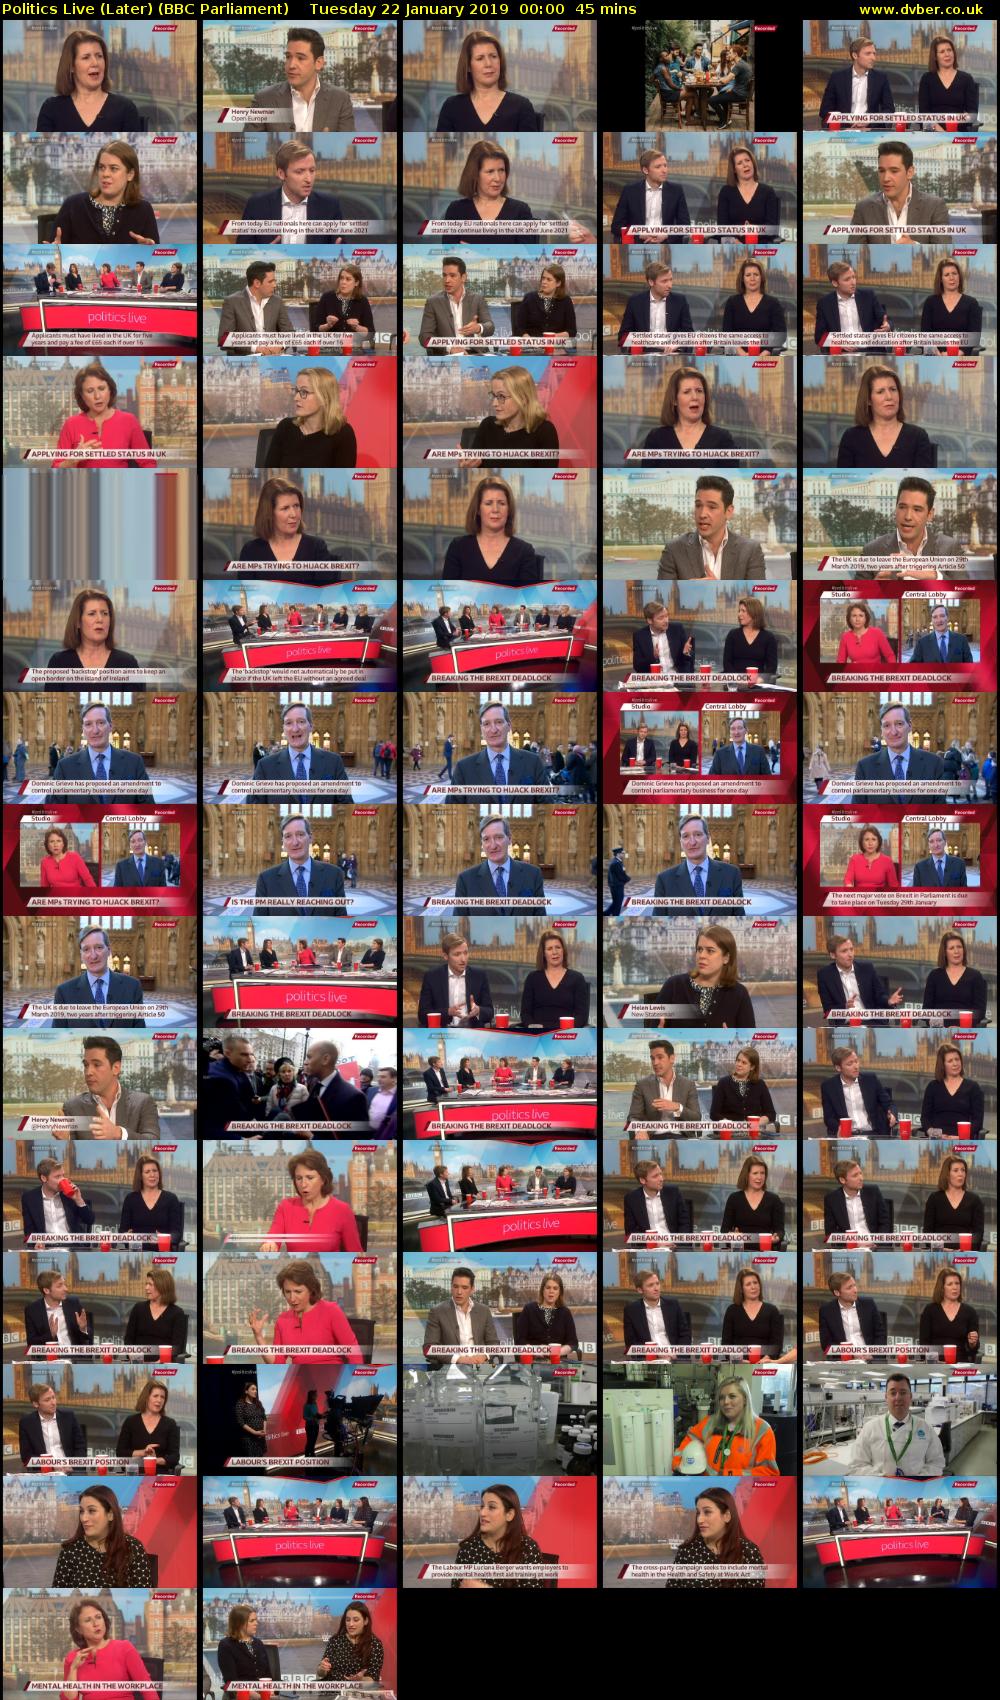 Politics Live (Later) (BBC Parliament) Tuesday 22 January 2019 00:00 - 00:45